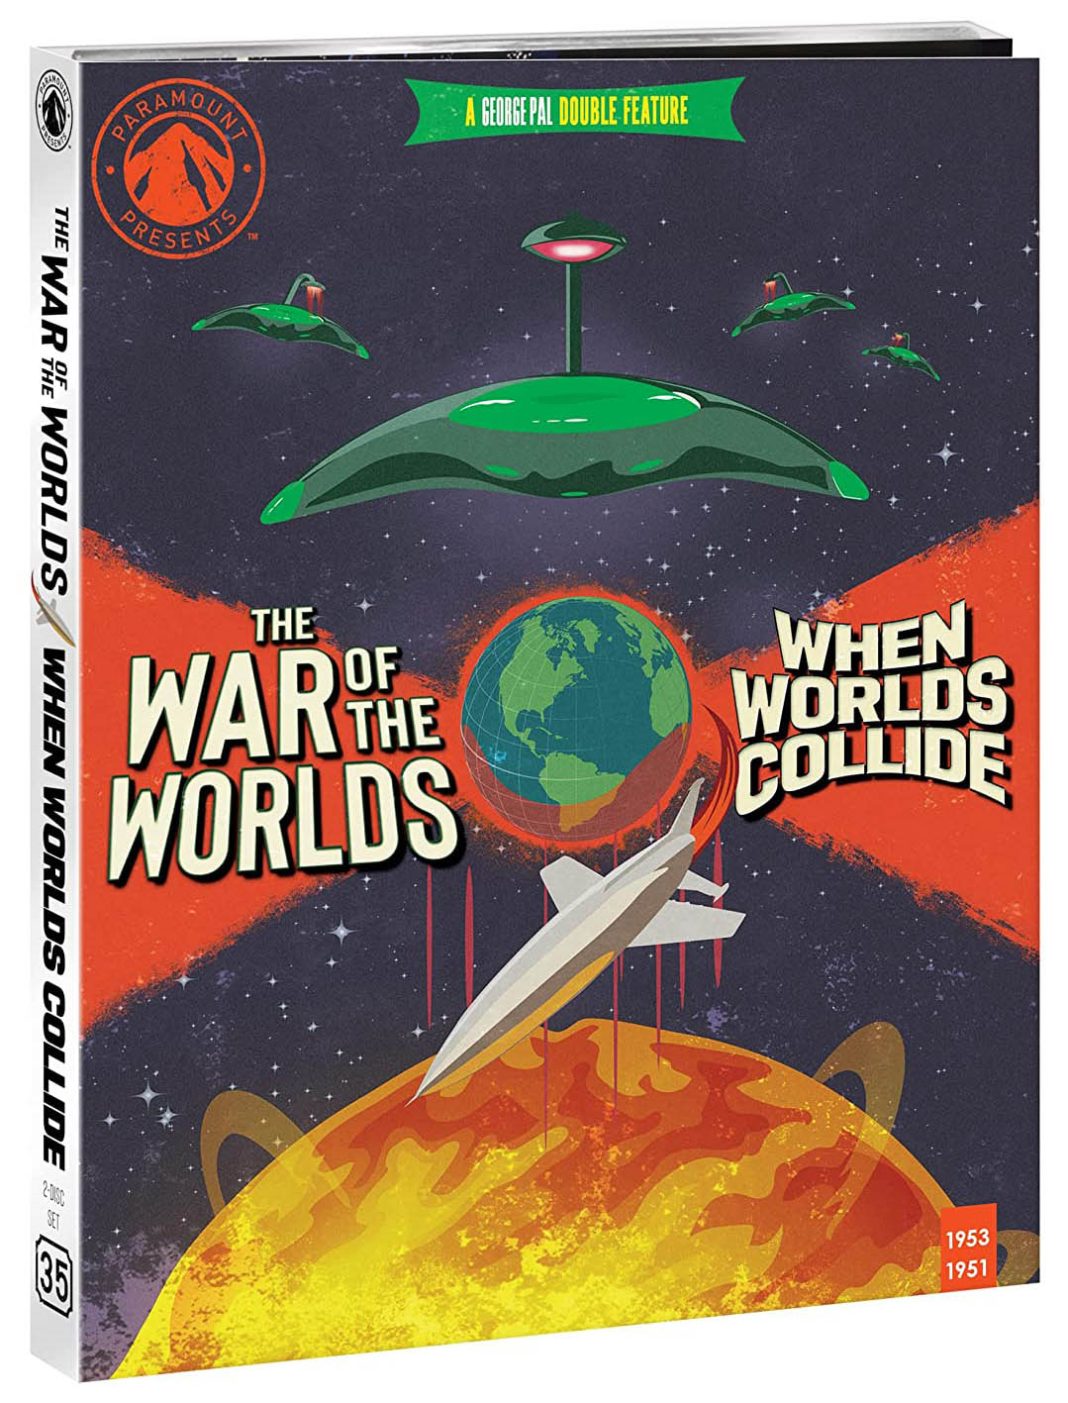 War of the Worlds (1953) 4k UHD + When Worlds Collide (1951) BD